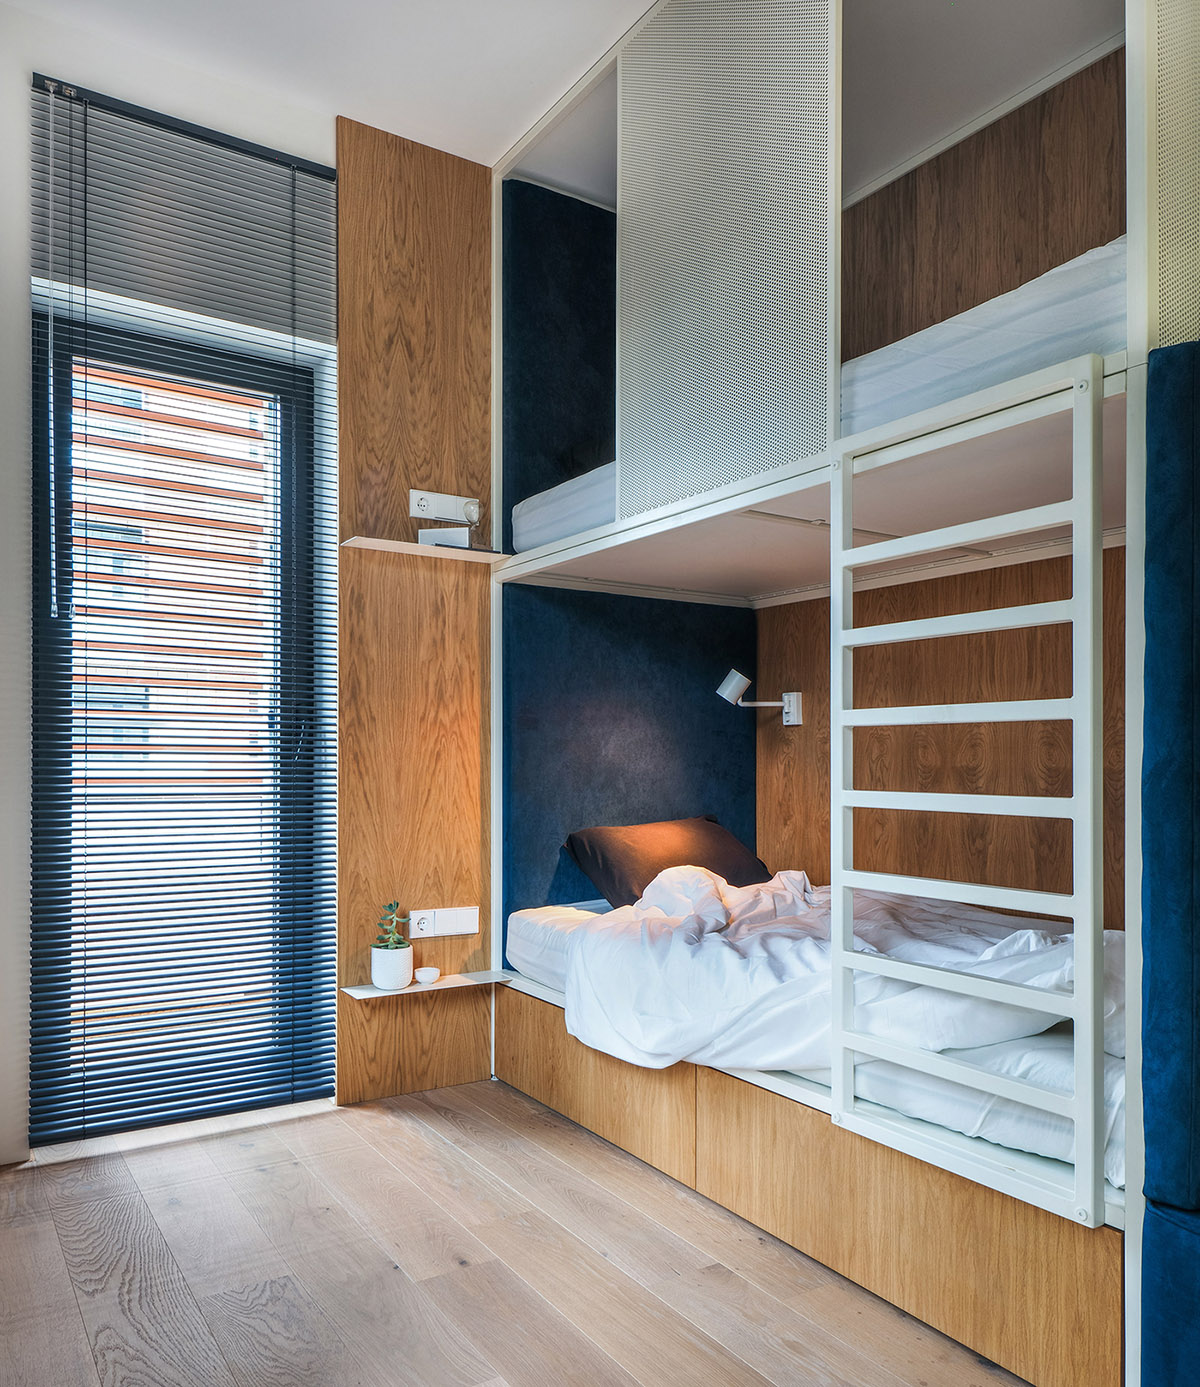 Bespoke Bunk Beds Interior Design Ideas, Bespoke Bunk Beds